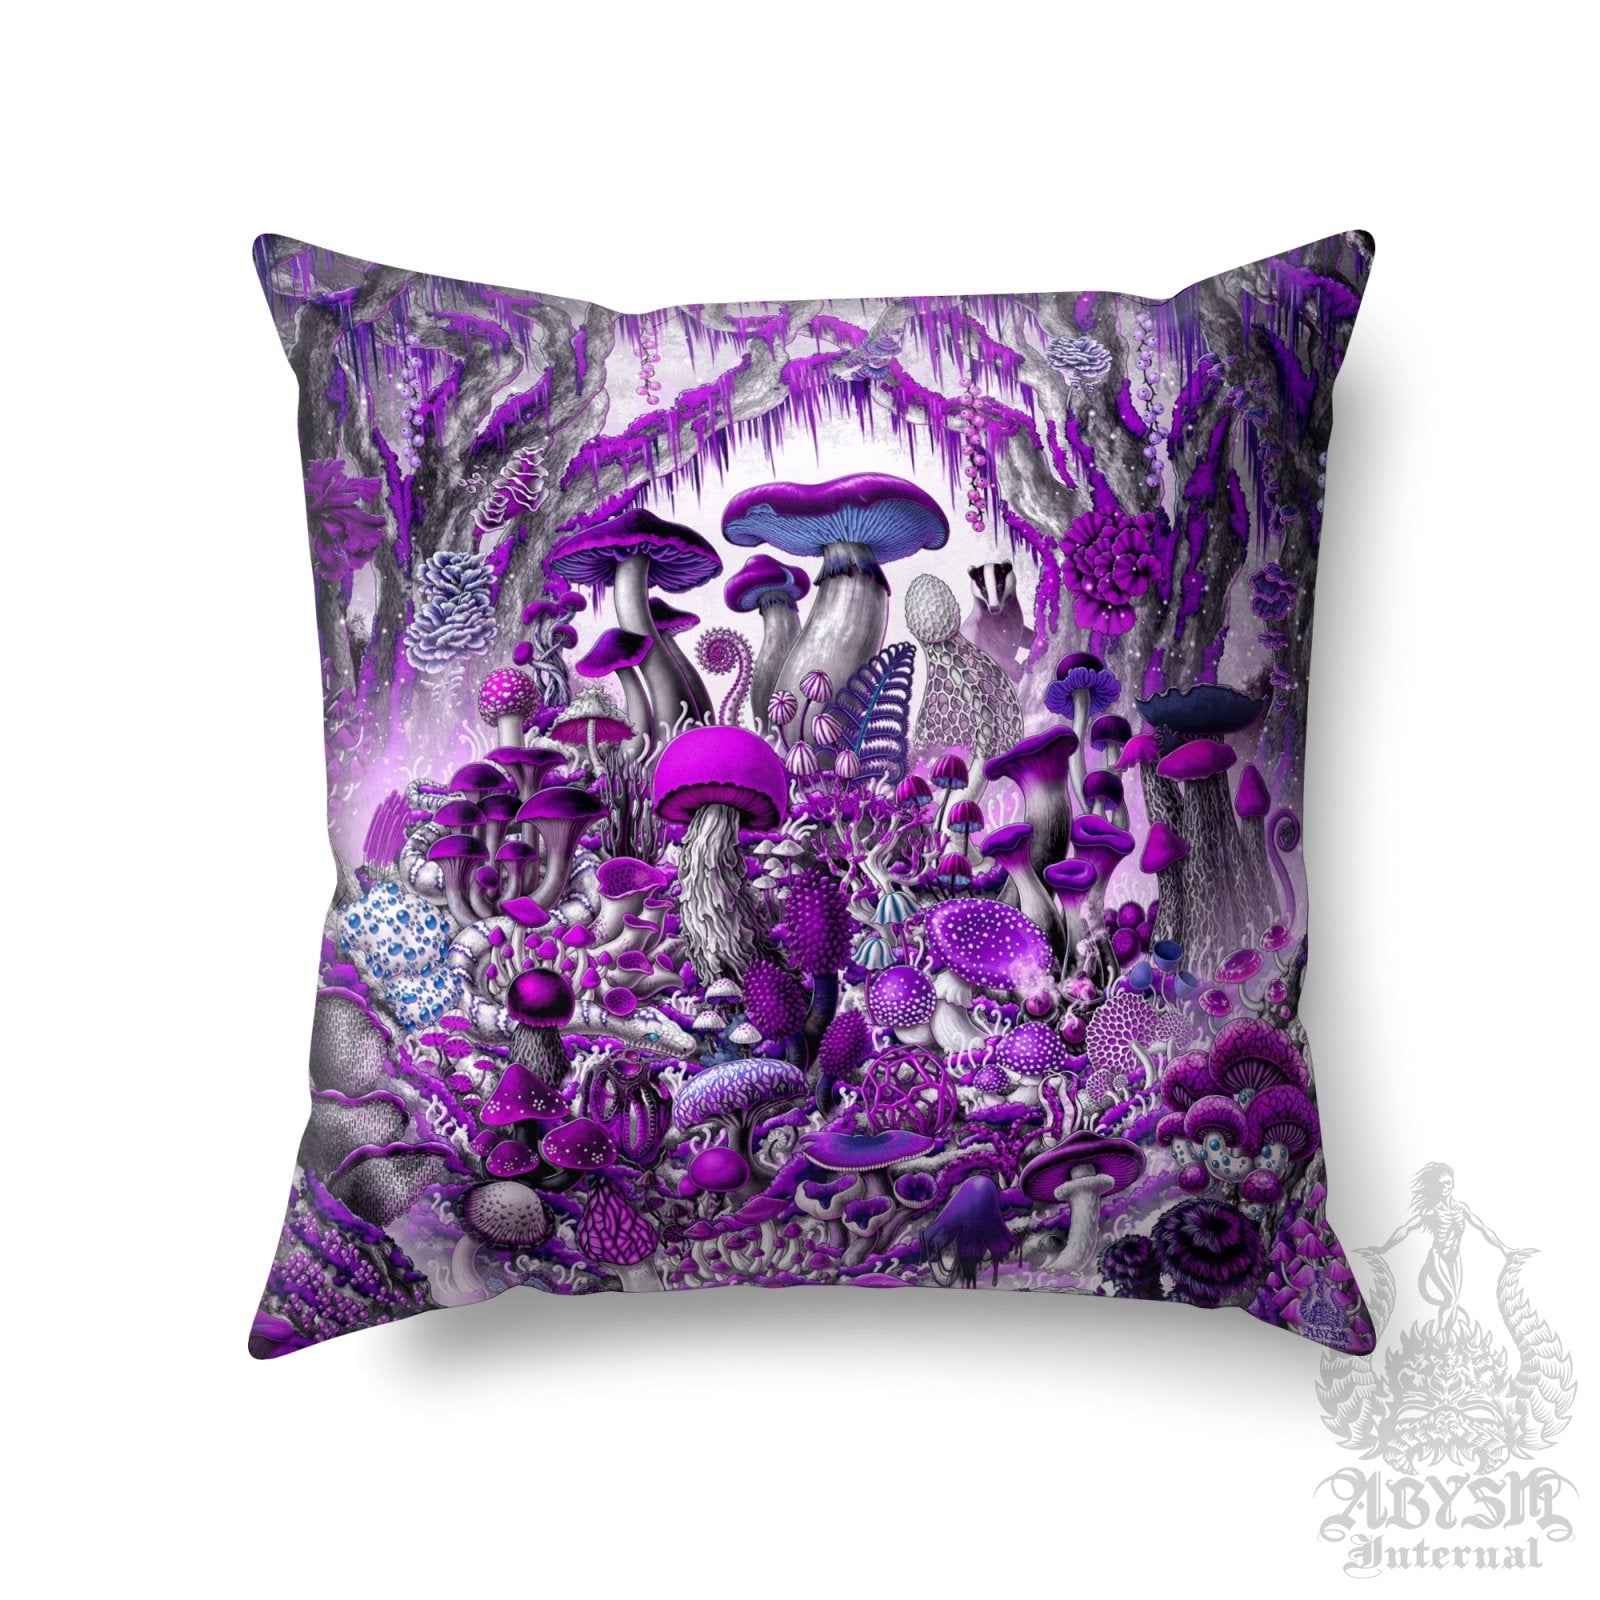 Gothic Mushrooms Throw Pillow, Decorative Accent Cushion, Purple White Goth Room Decor, Mycology Art Print, Mycologist Gift - Abysm Internal